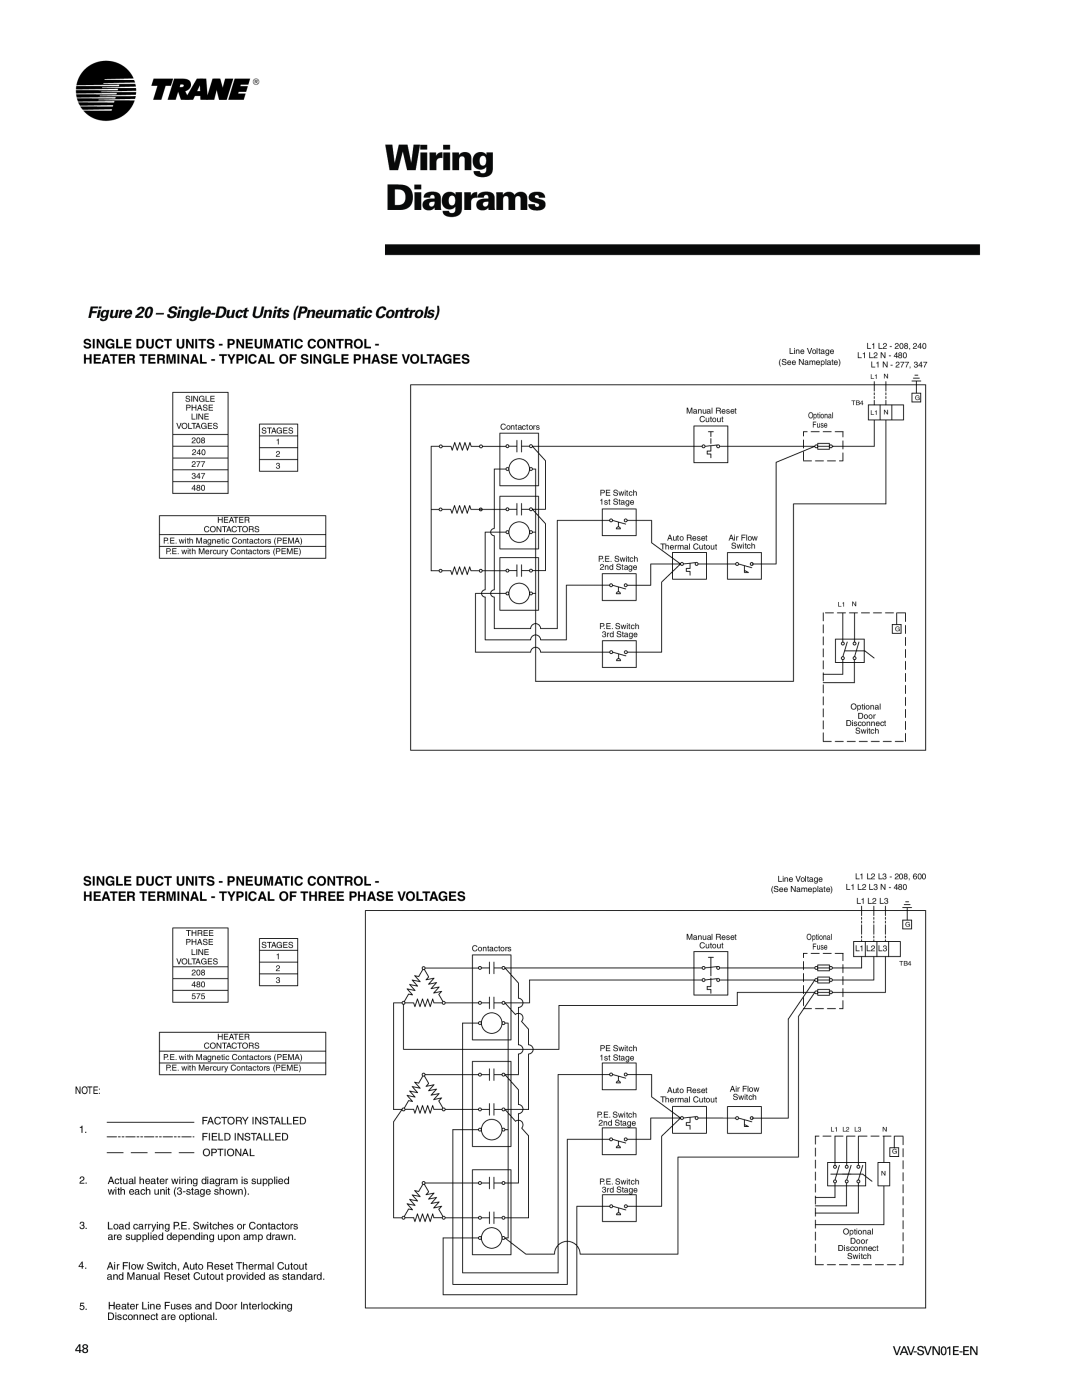 Trane VAV-SVN01E-EN, Trane Wiring Diagrams, Single-DuctUnits Pneumatic Controls, Single Duct Units - Pneumatic Control 